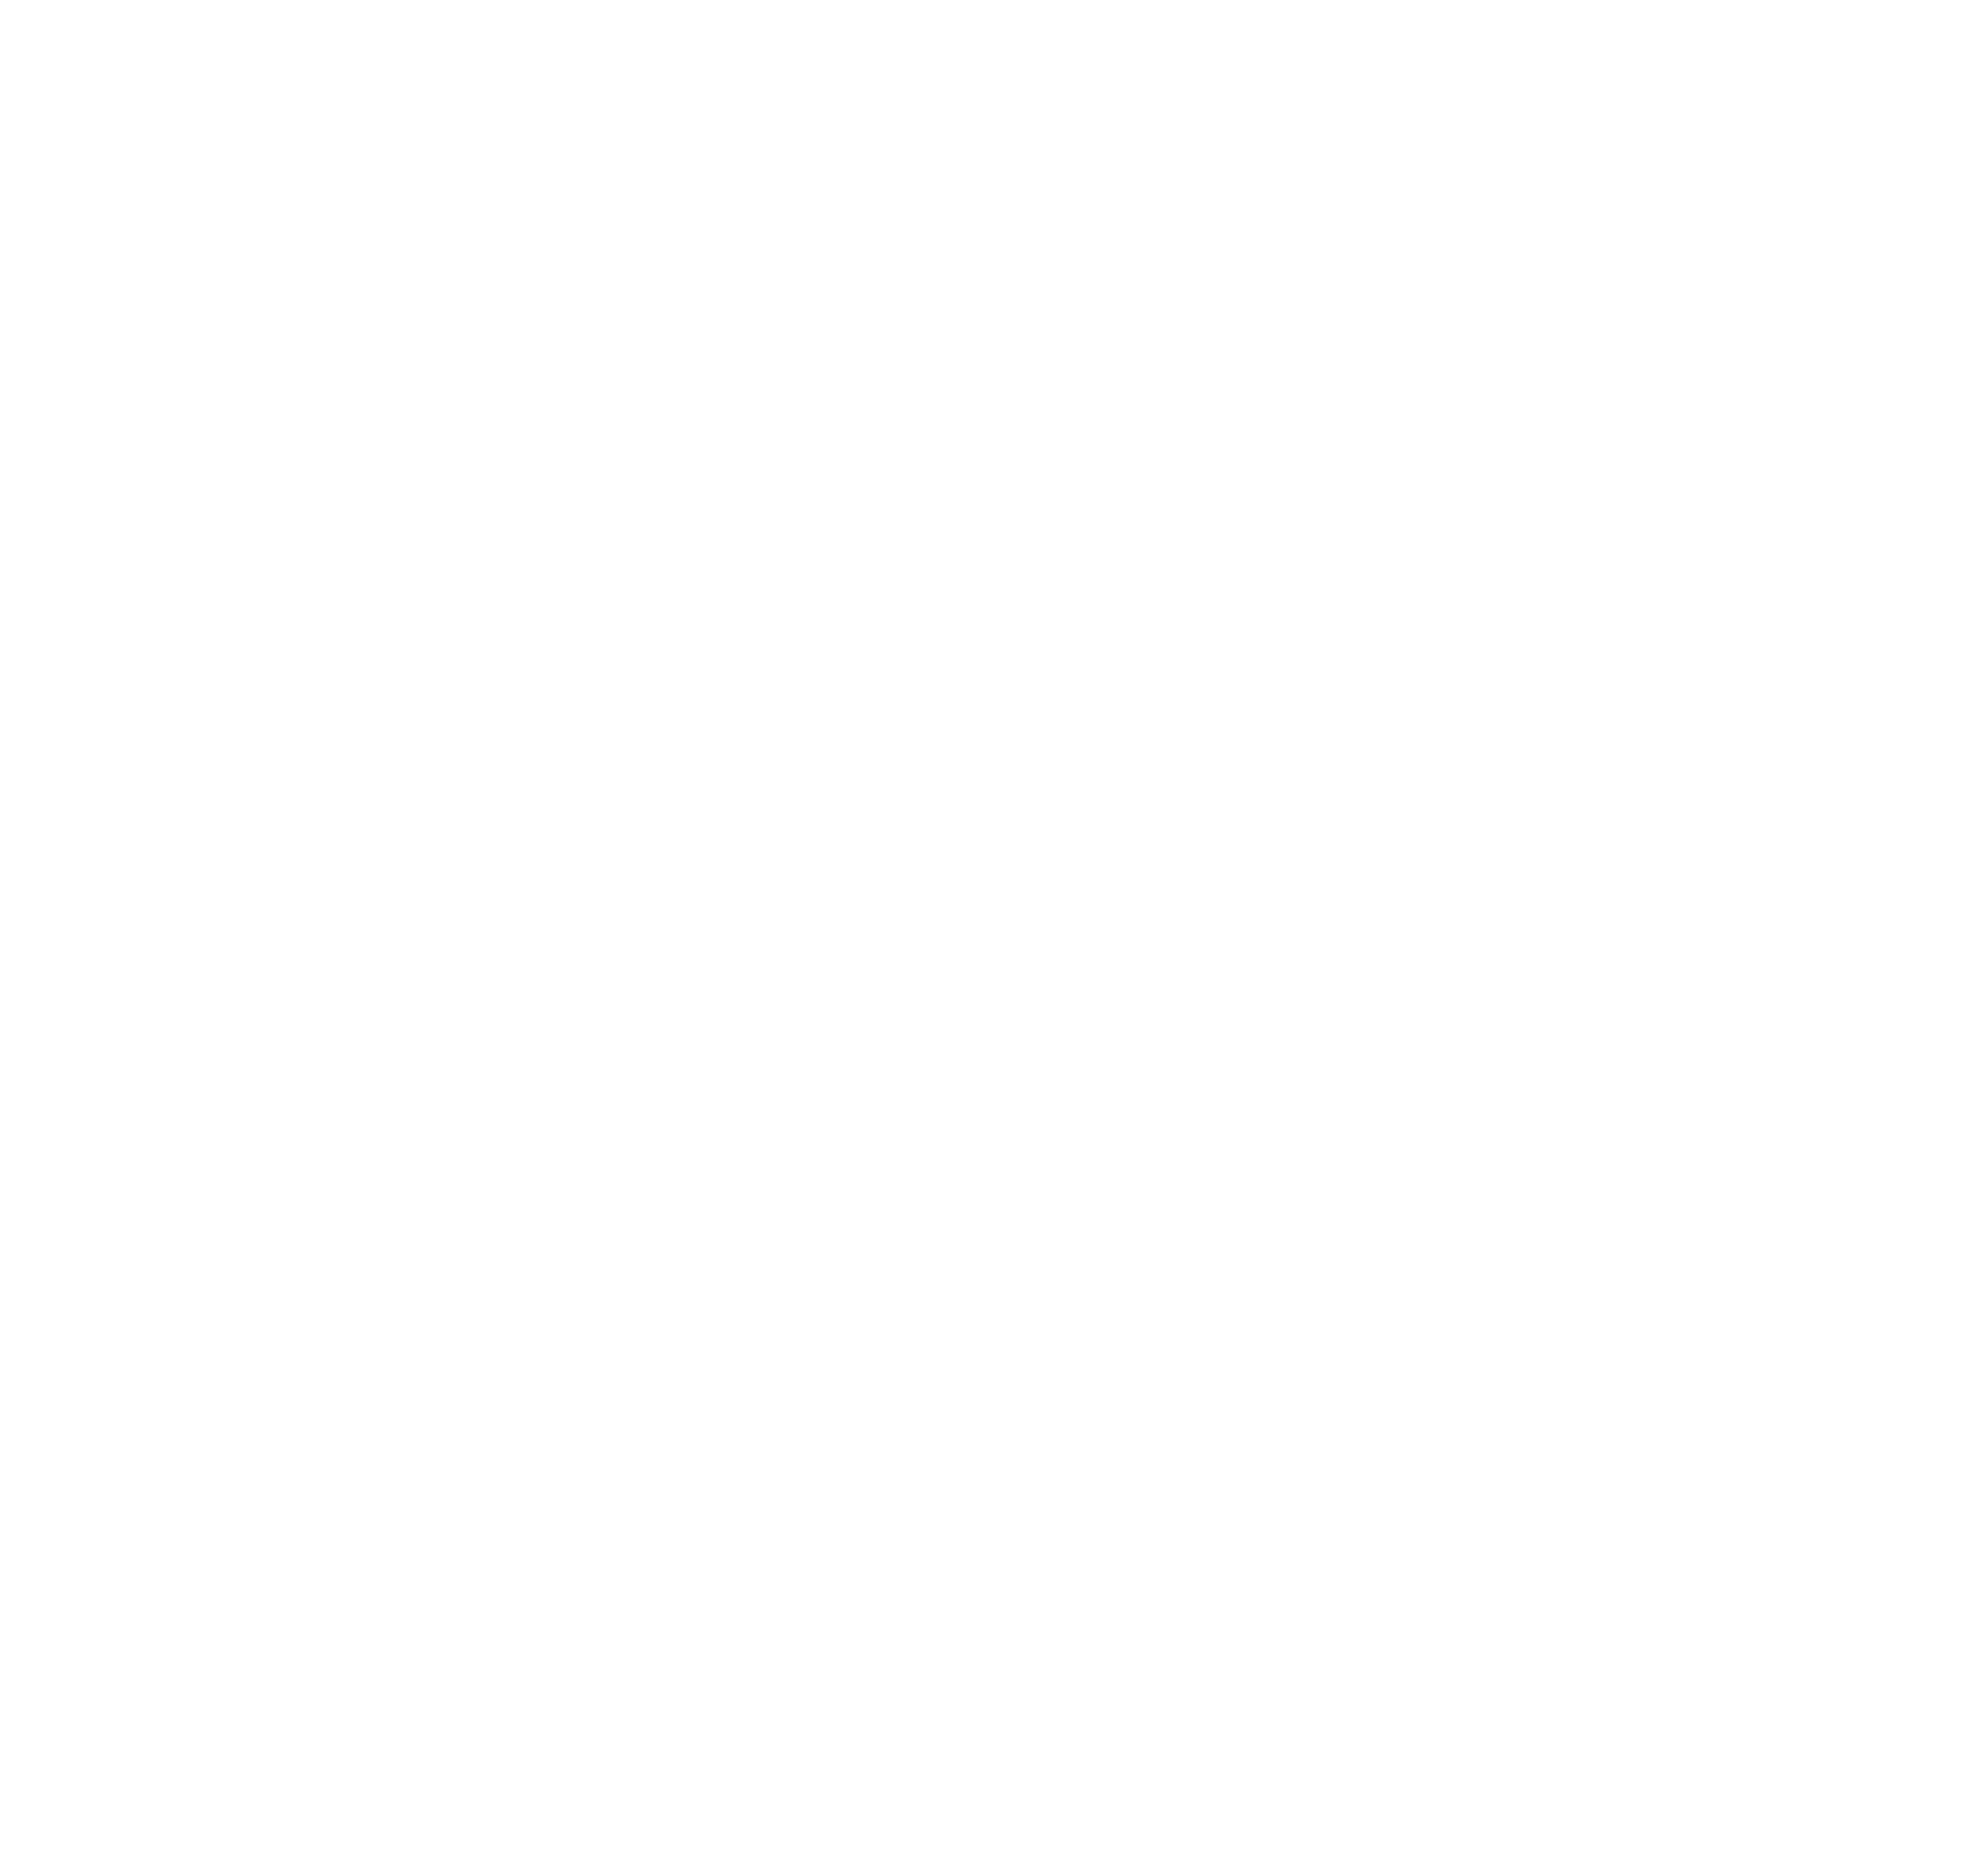 Hill & Smith PLC logo